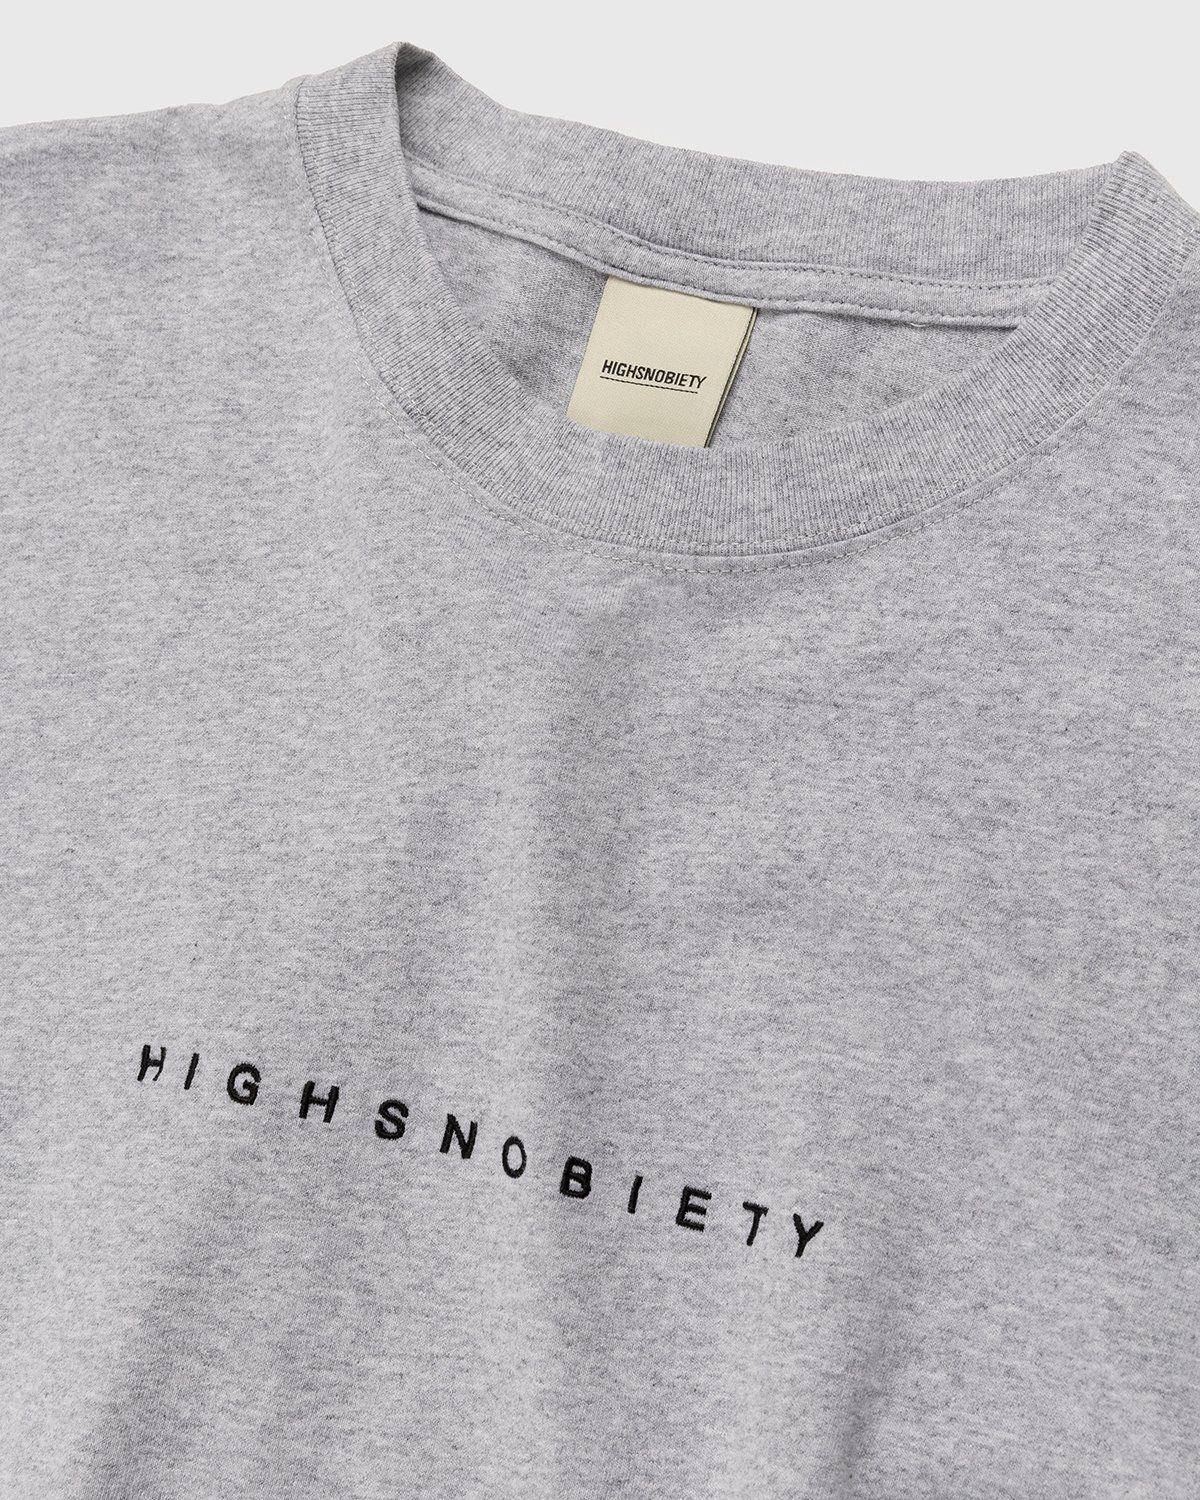 Highsnobiety – Staples T-Shirt Heather Grey - Image 3